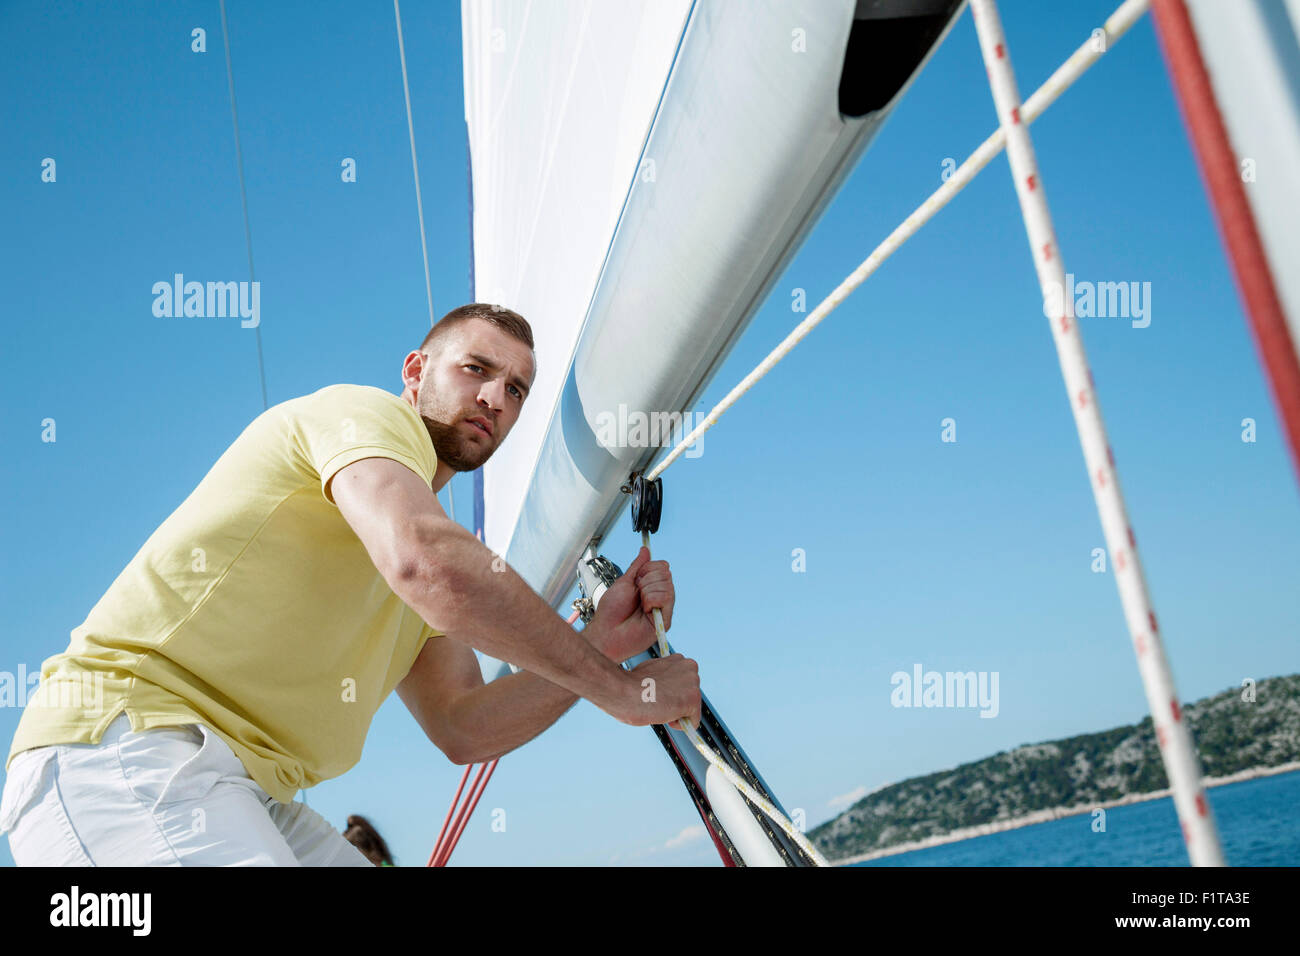 Man adjusting sail on sailboat, Adriatic Sea Stock Photo